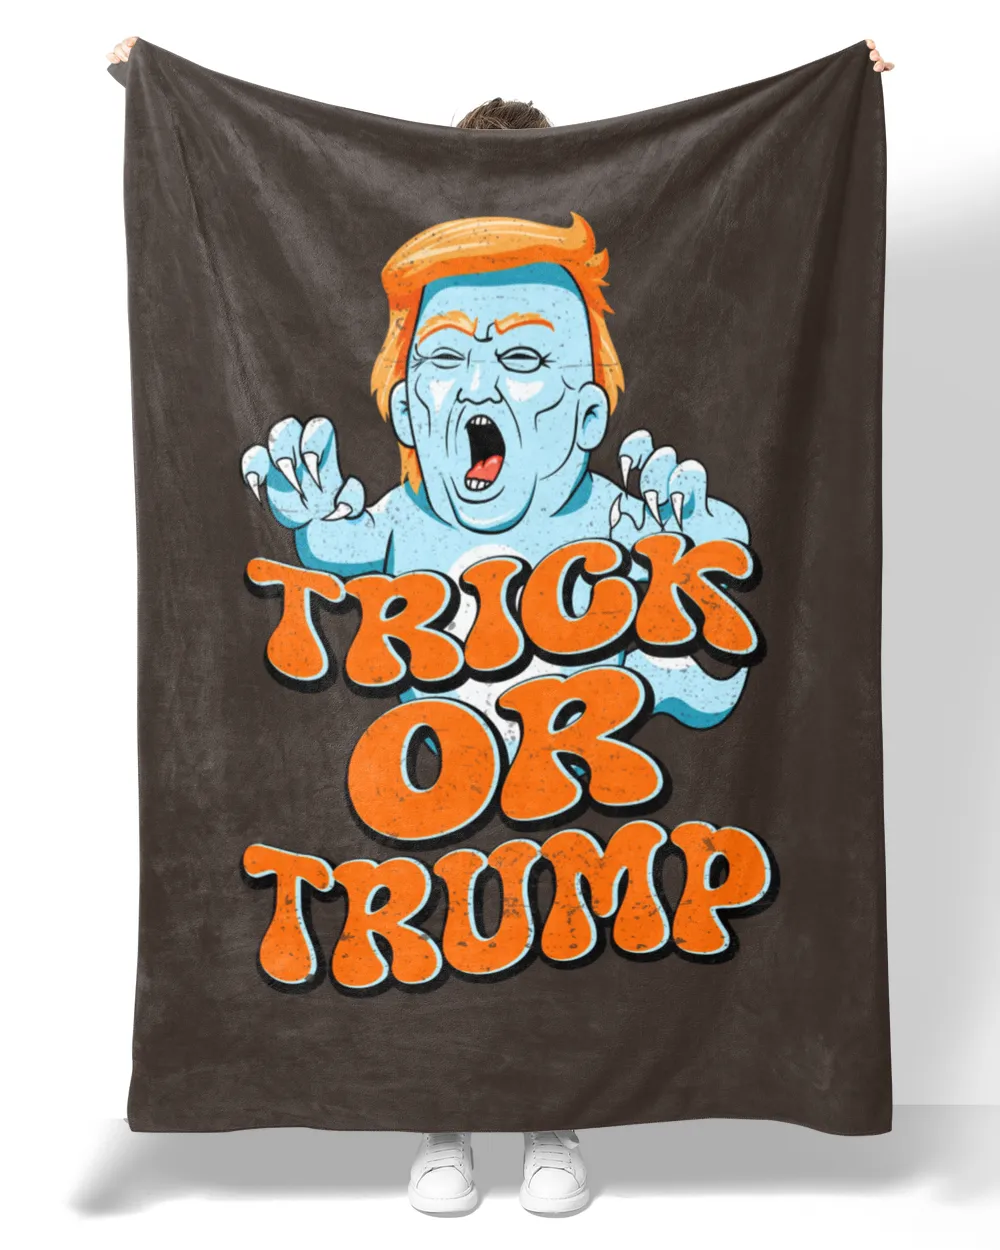 Trick Or Trump Ghost Halloween Distressed Groovy Retro Style Long Sleeve Tank tops Hoodies